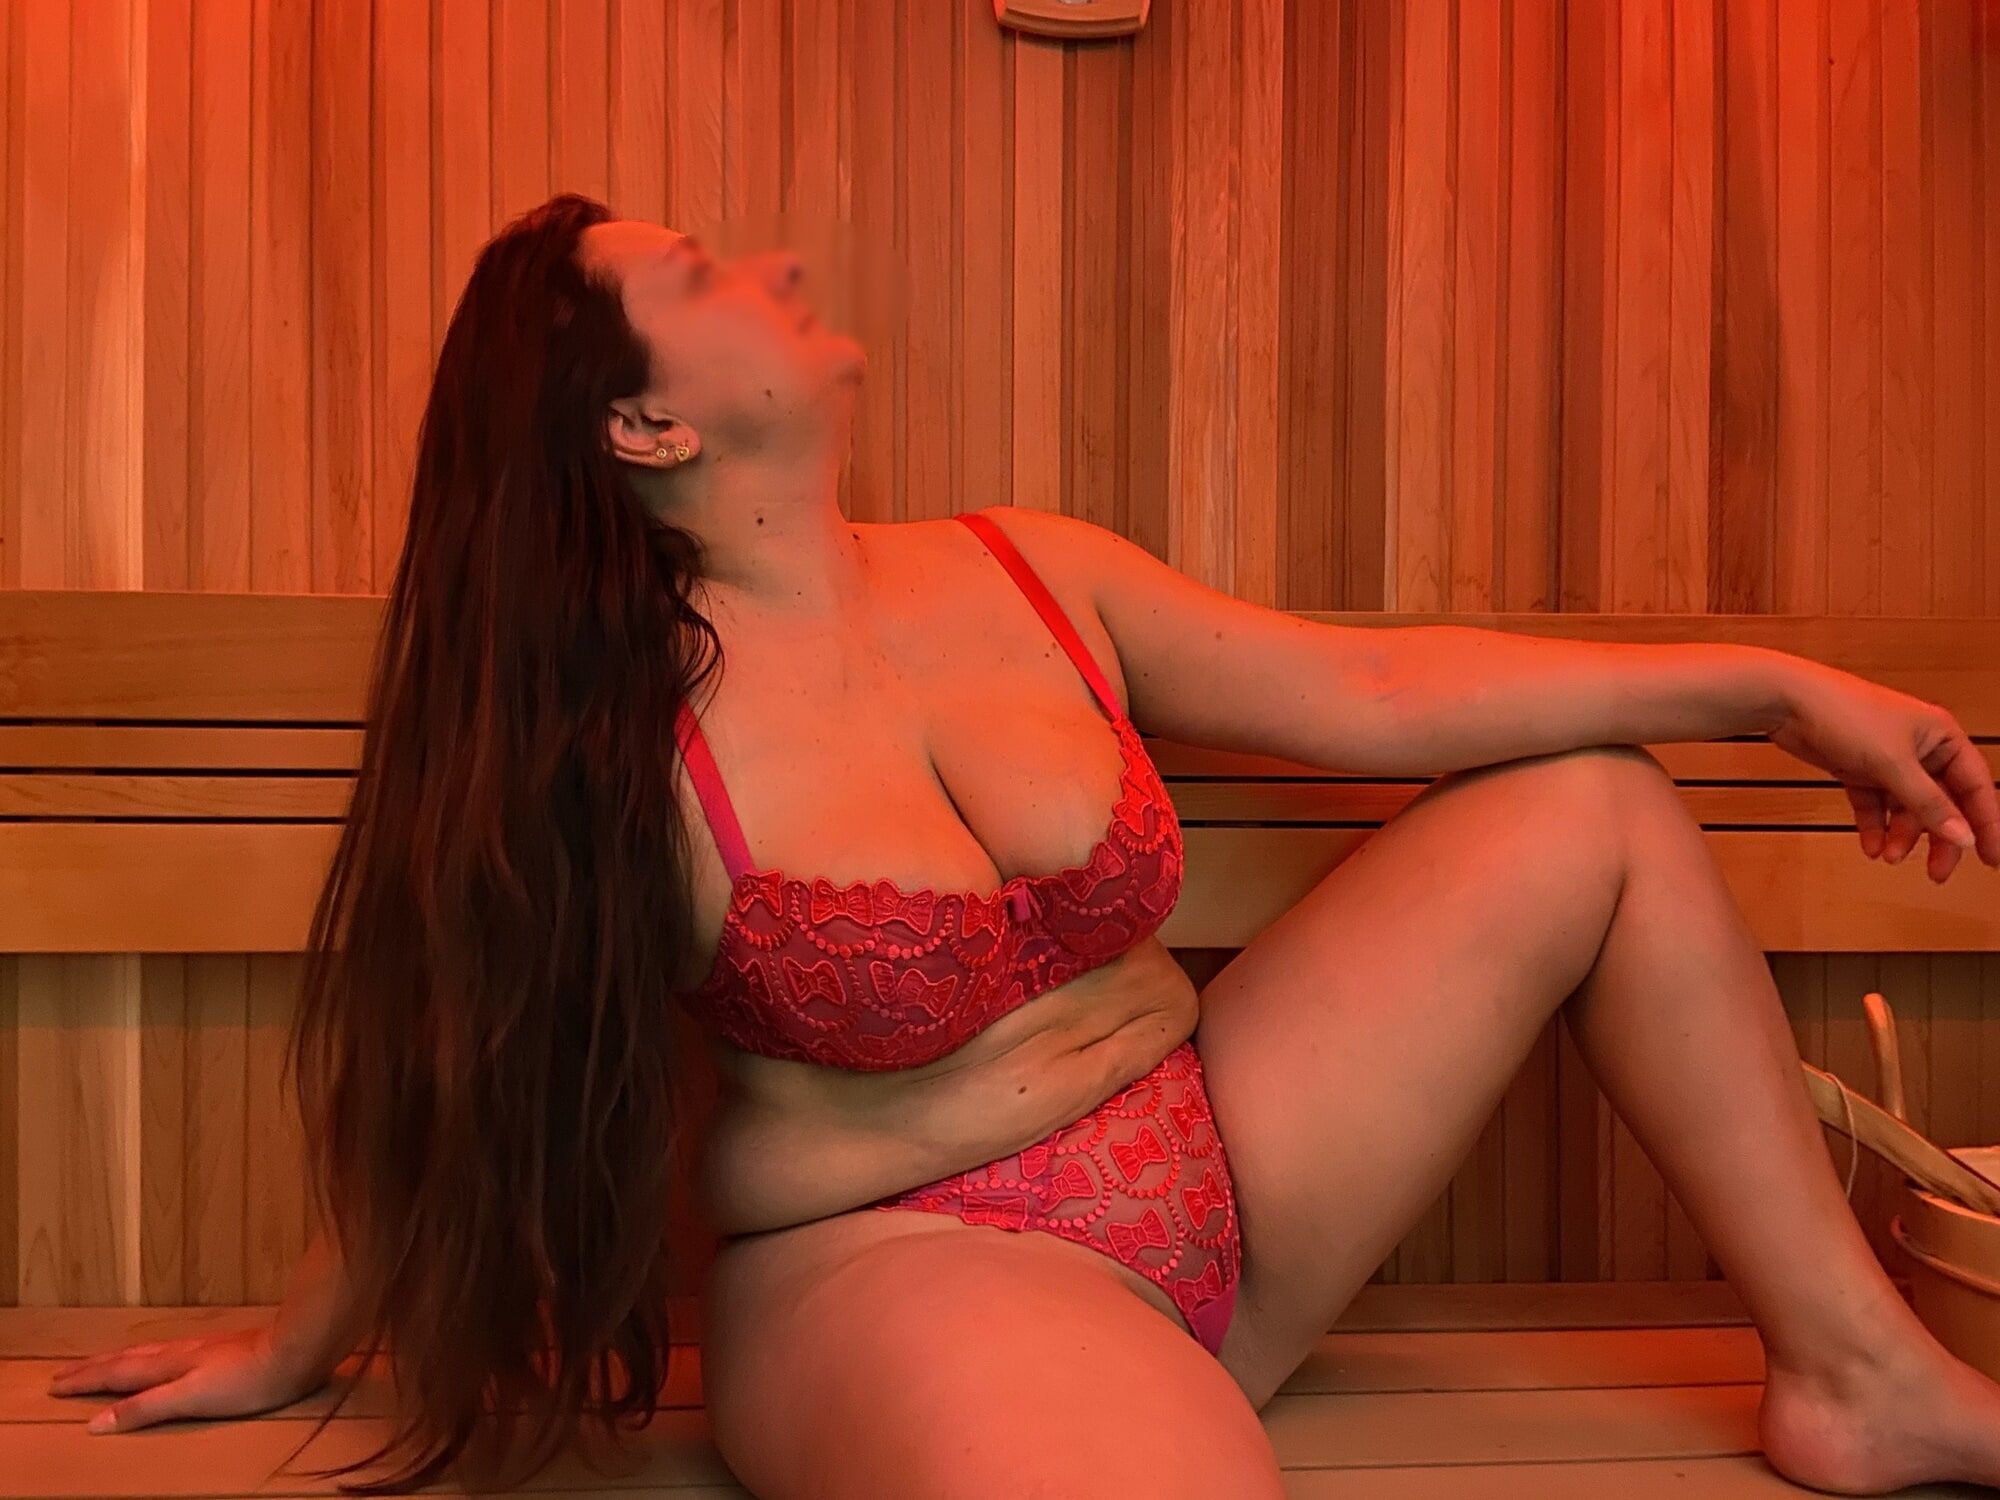 My body in the heat of the sauna #5